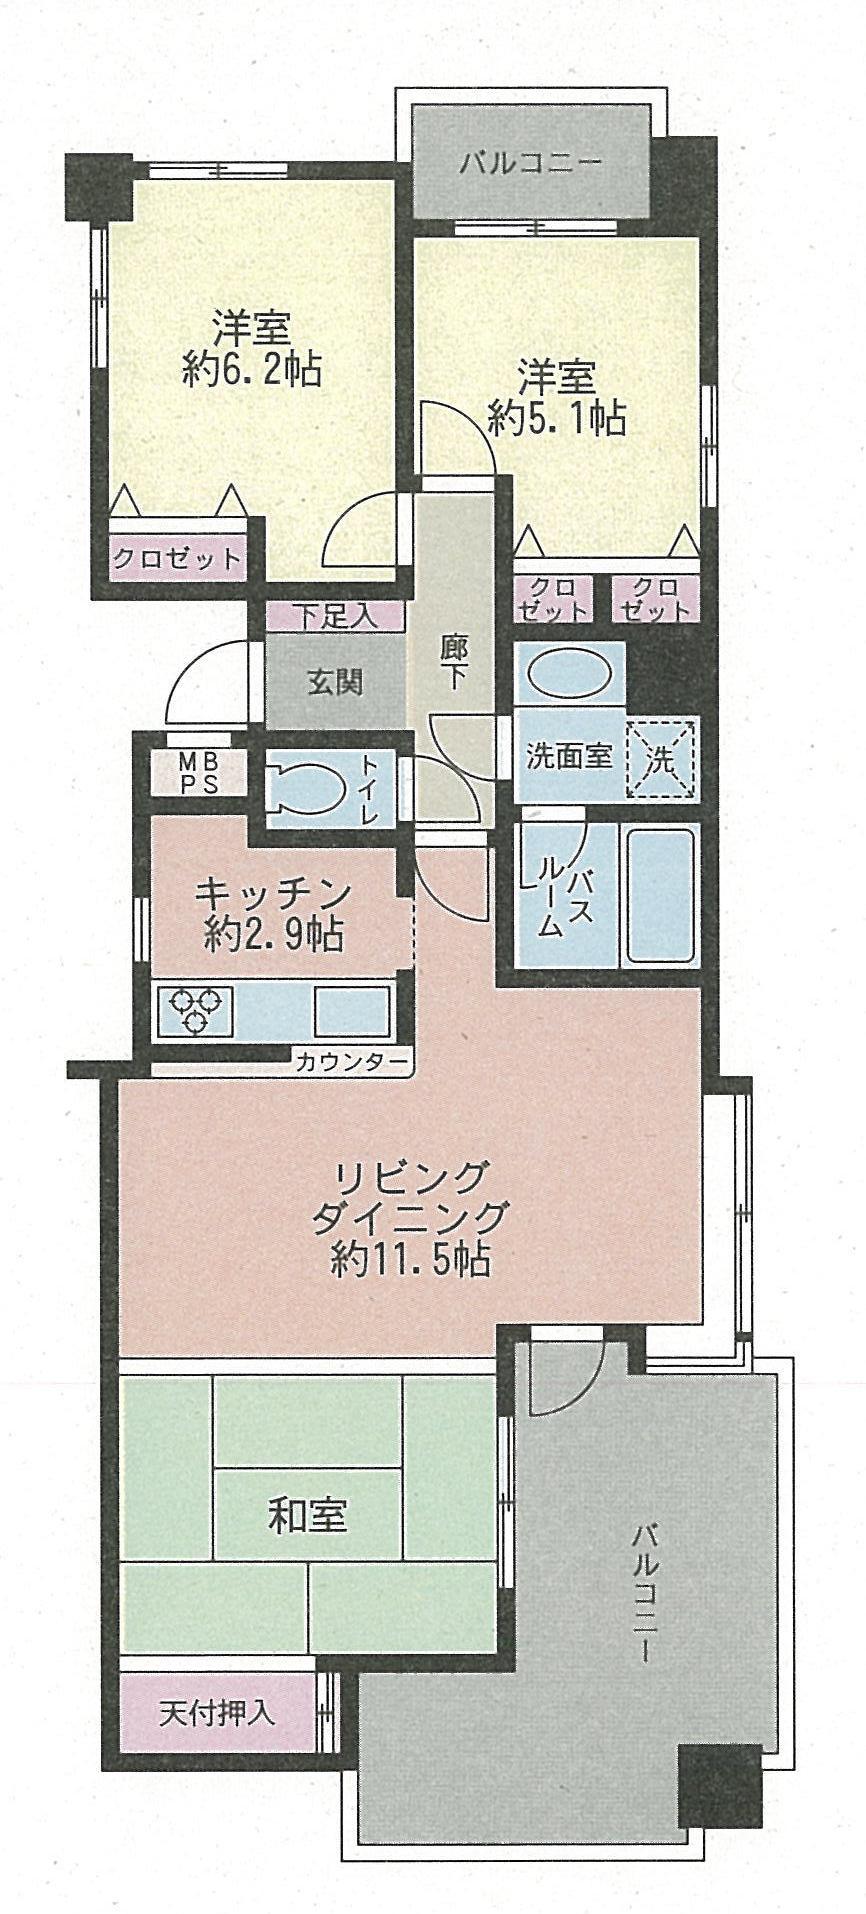 Floor plan. 3LDK, Price 22,800,000 yen, Occupied area 68.39 sq m , Balcony area 16.42 sq m